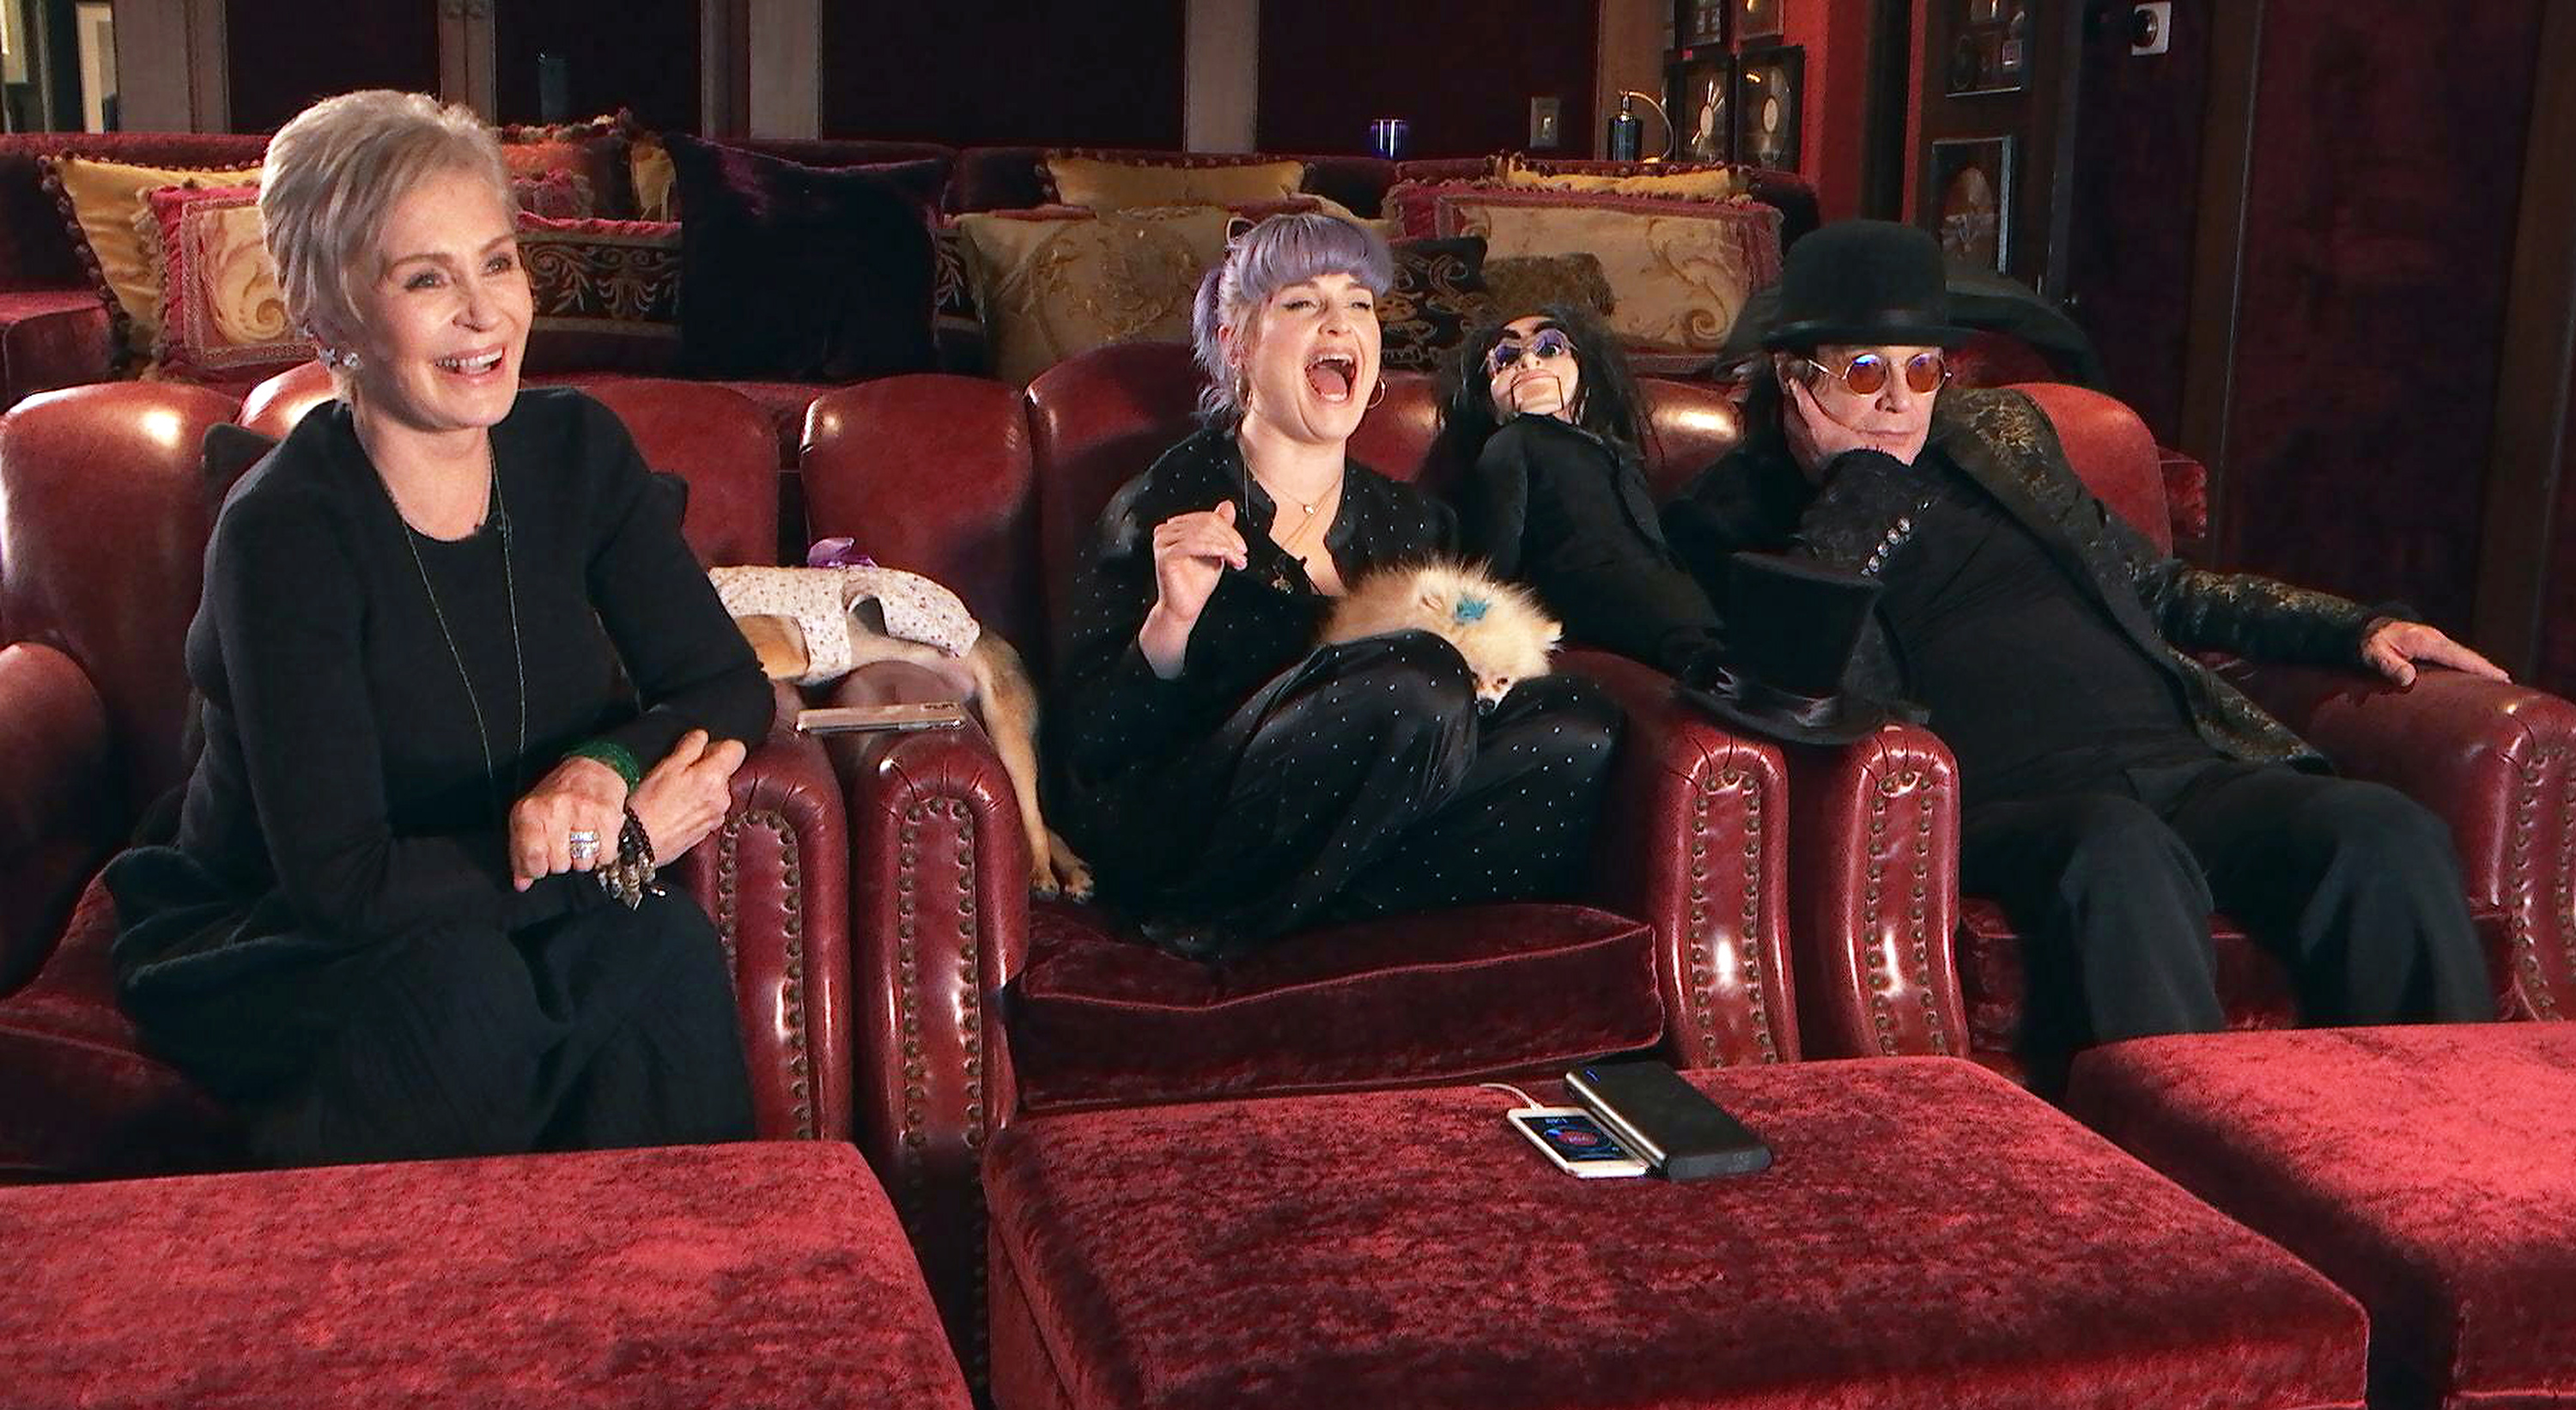 Sharon, Kelly et Ozzy Osbourne dans la série "Celebrity Watch Party" | Source : Getty Images